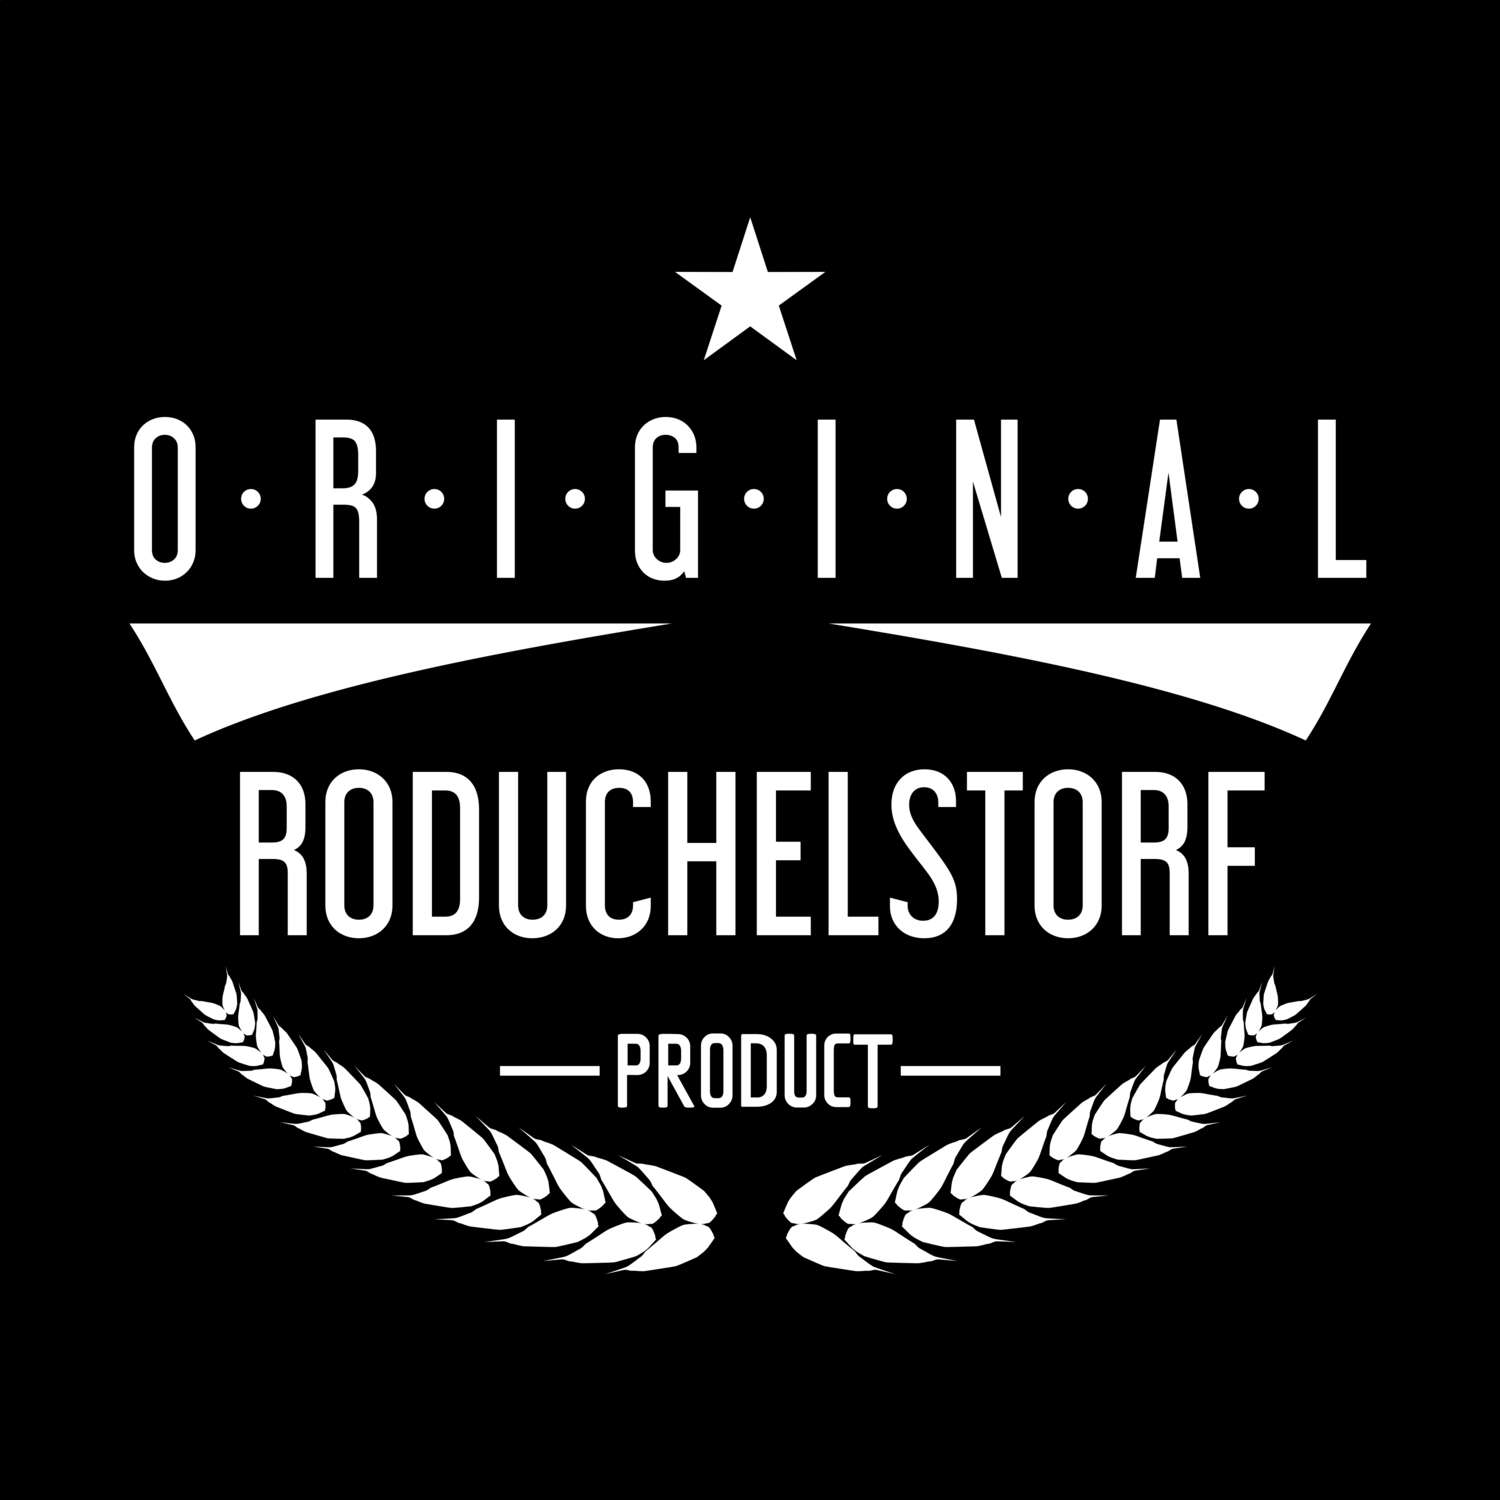 Roduchelstorf T-Shirt »Original Product«